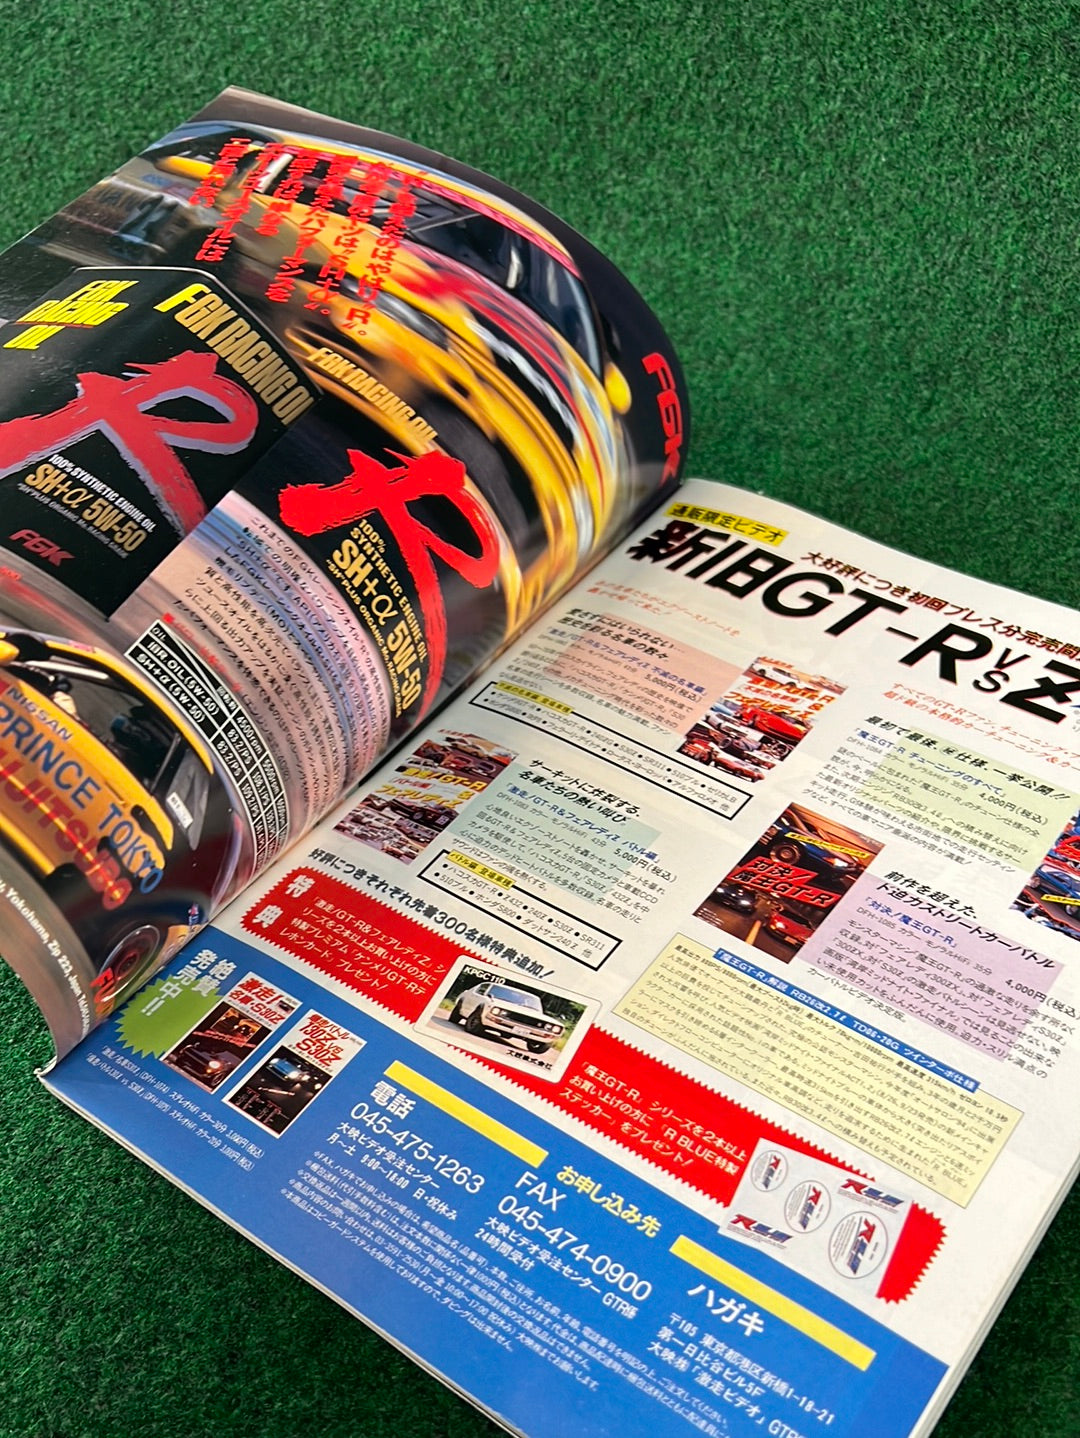 GT-R Club Magazine Vol. 1, 2 & 3 Set